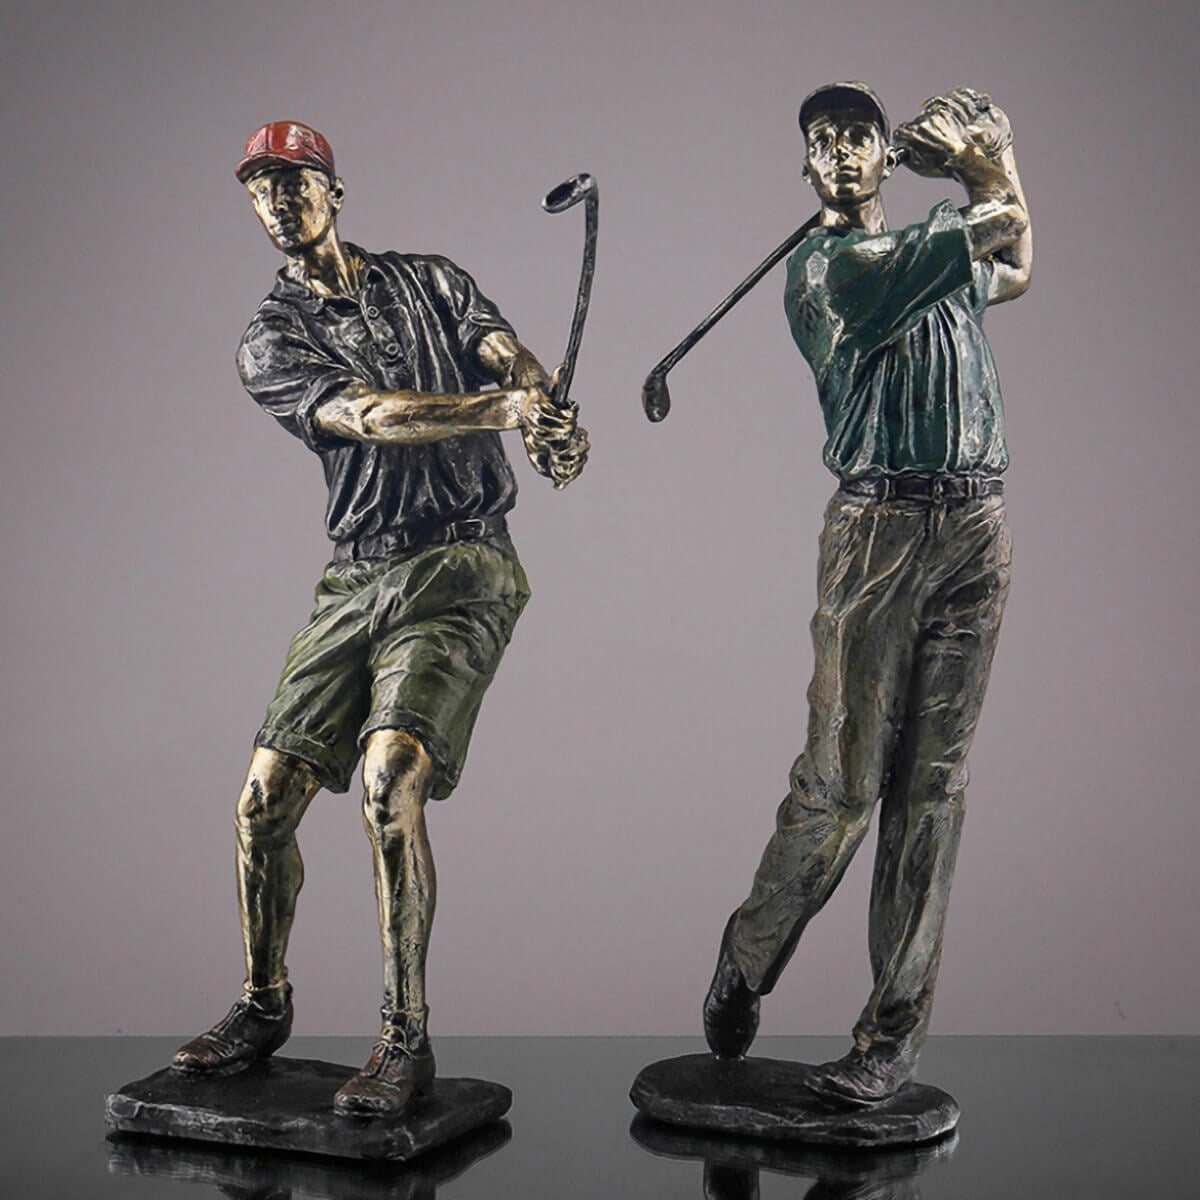 Vintage Golfer Sculpture in Antique Finish